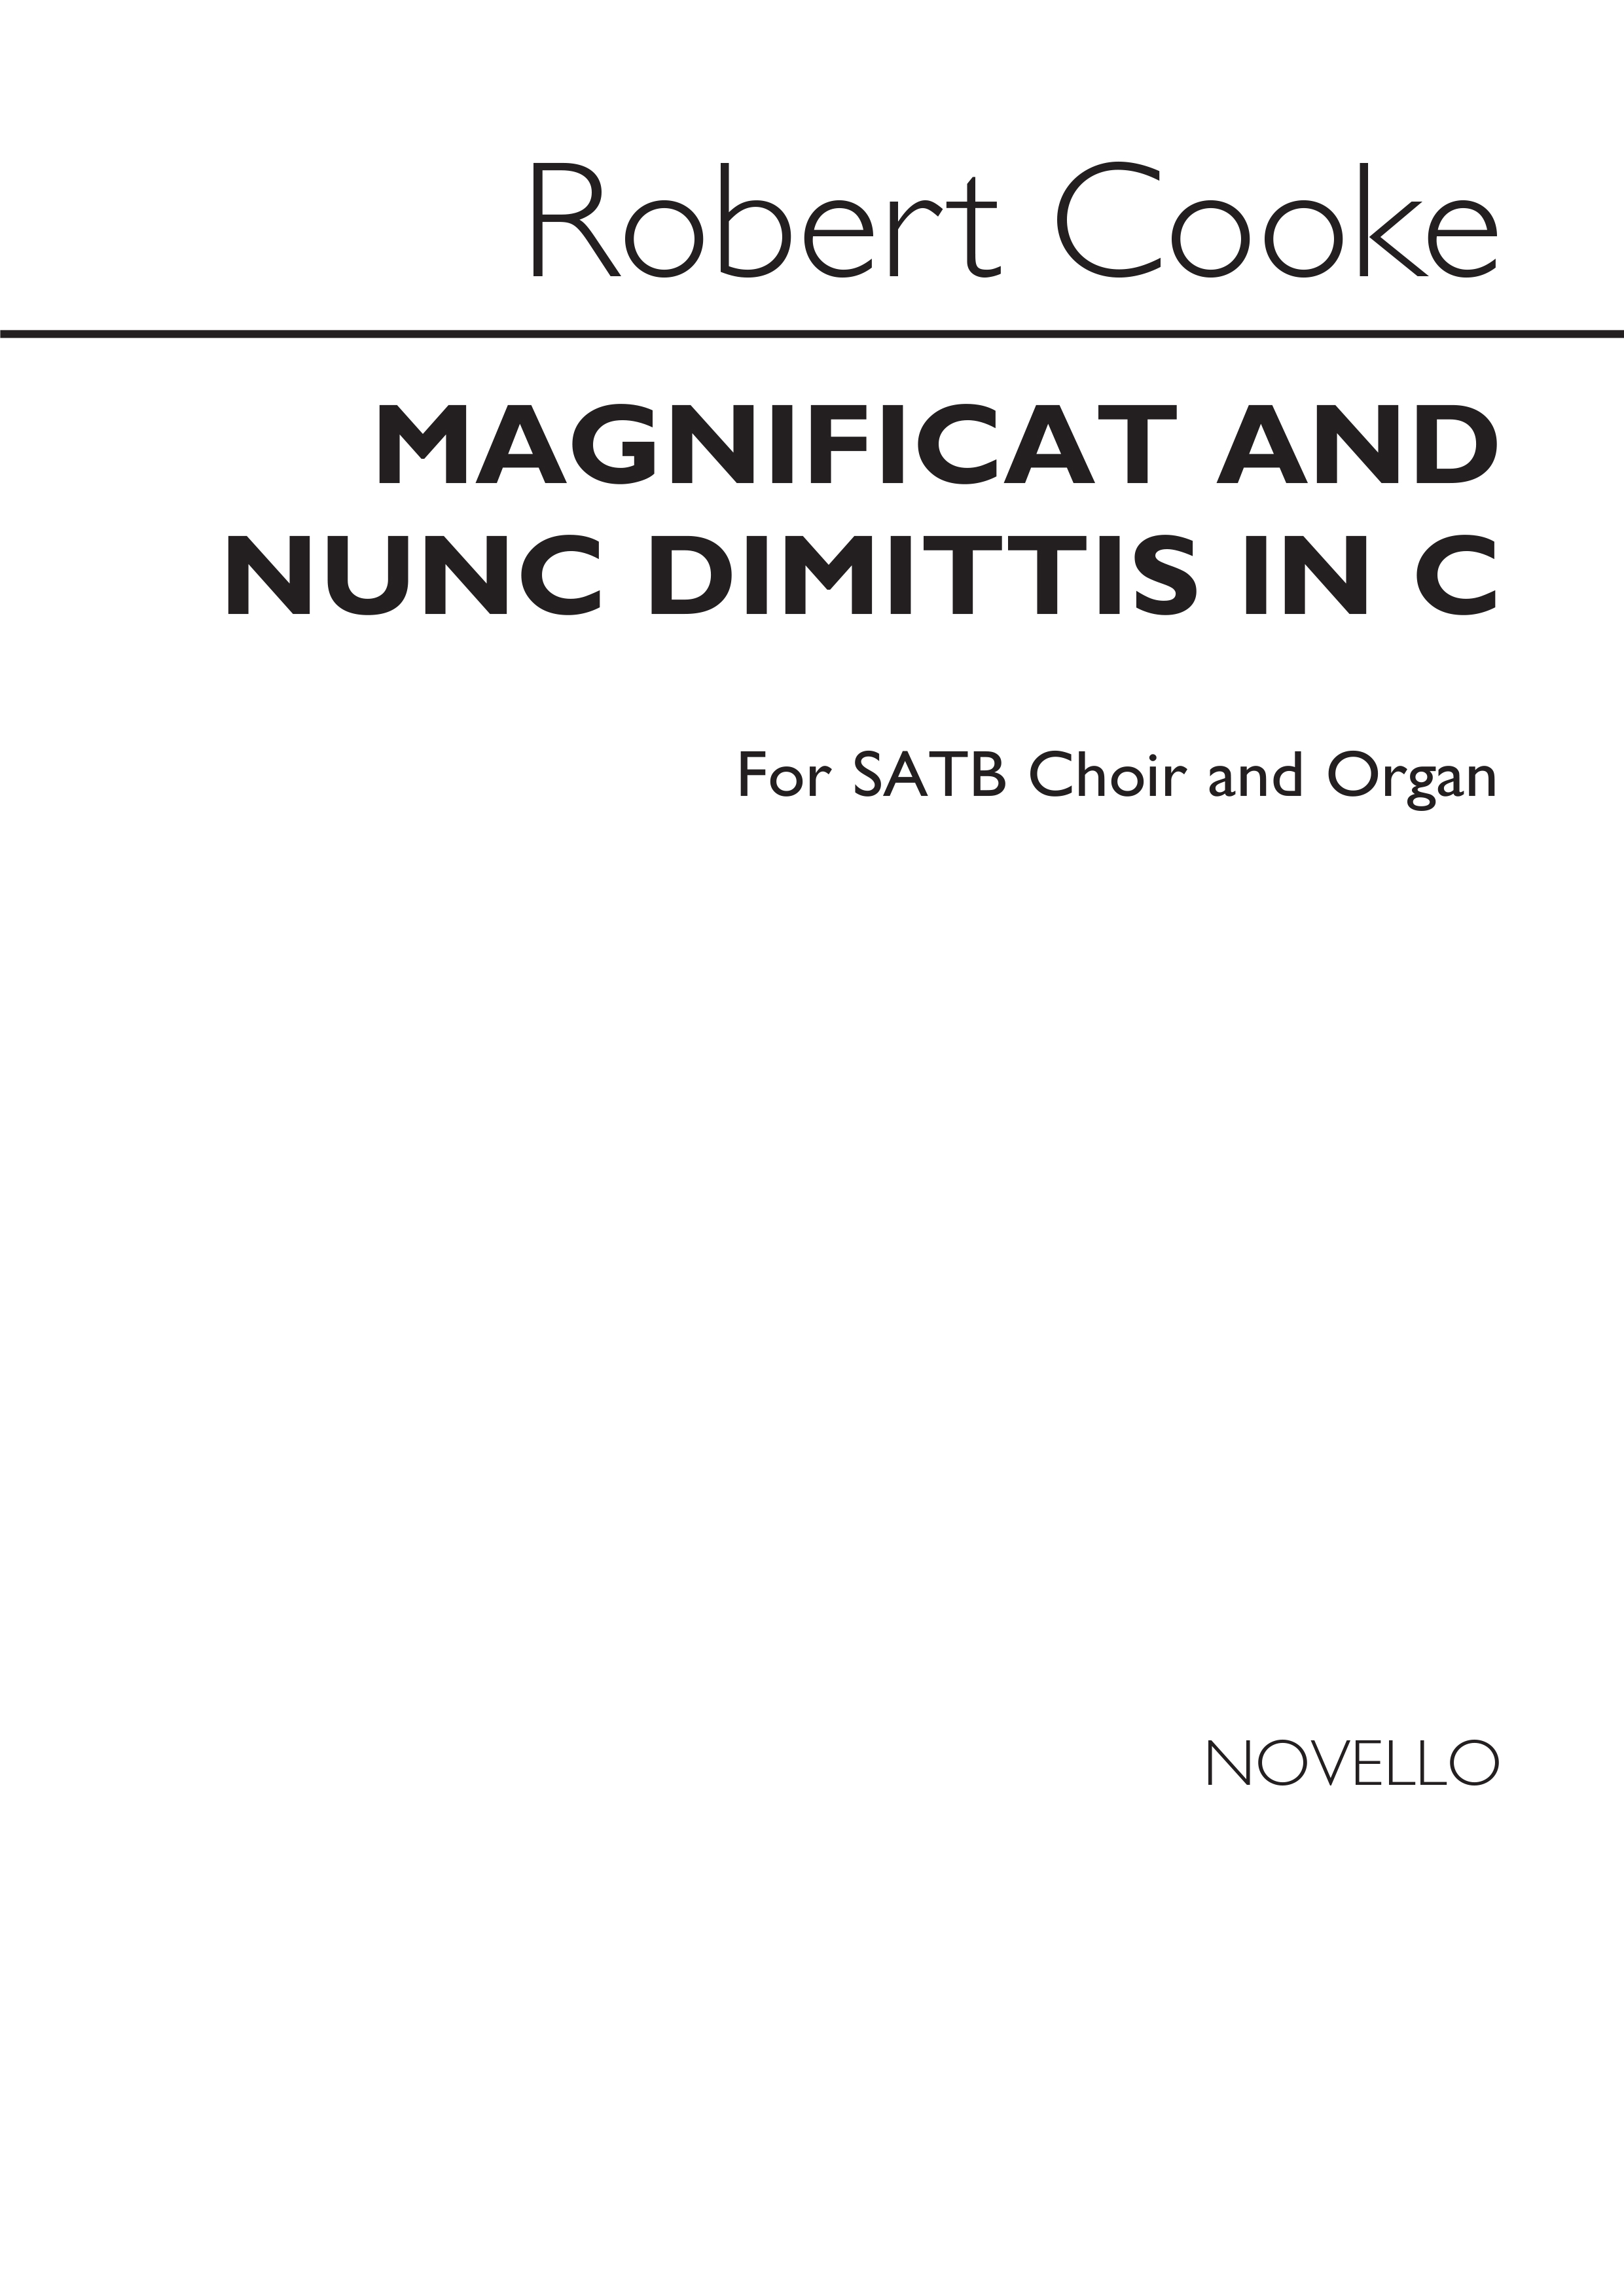 Robert Cooke: Magnificat And Nunc Dimittis In C Satb/Organ